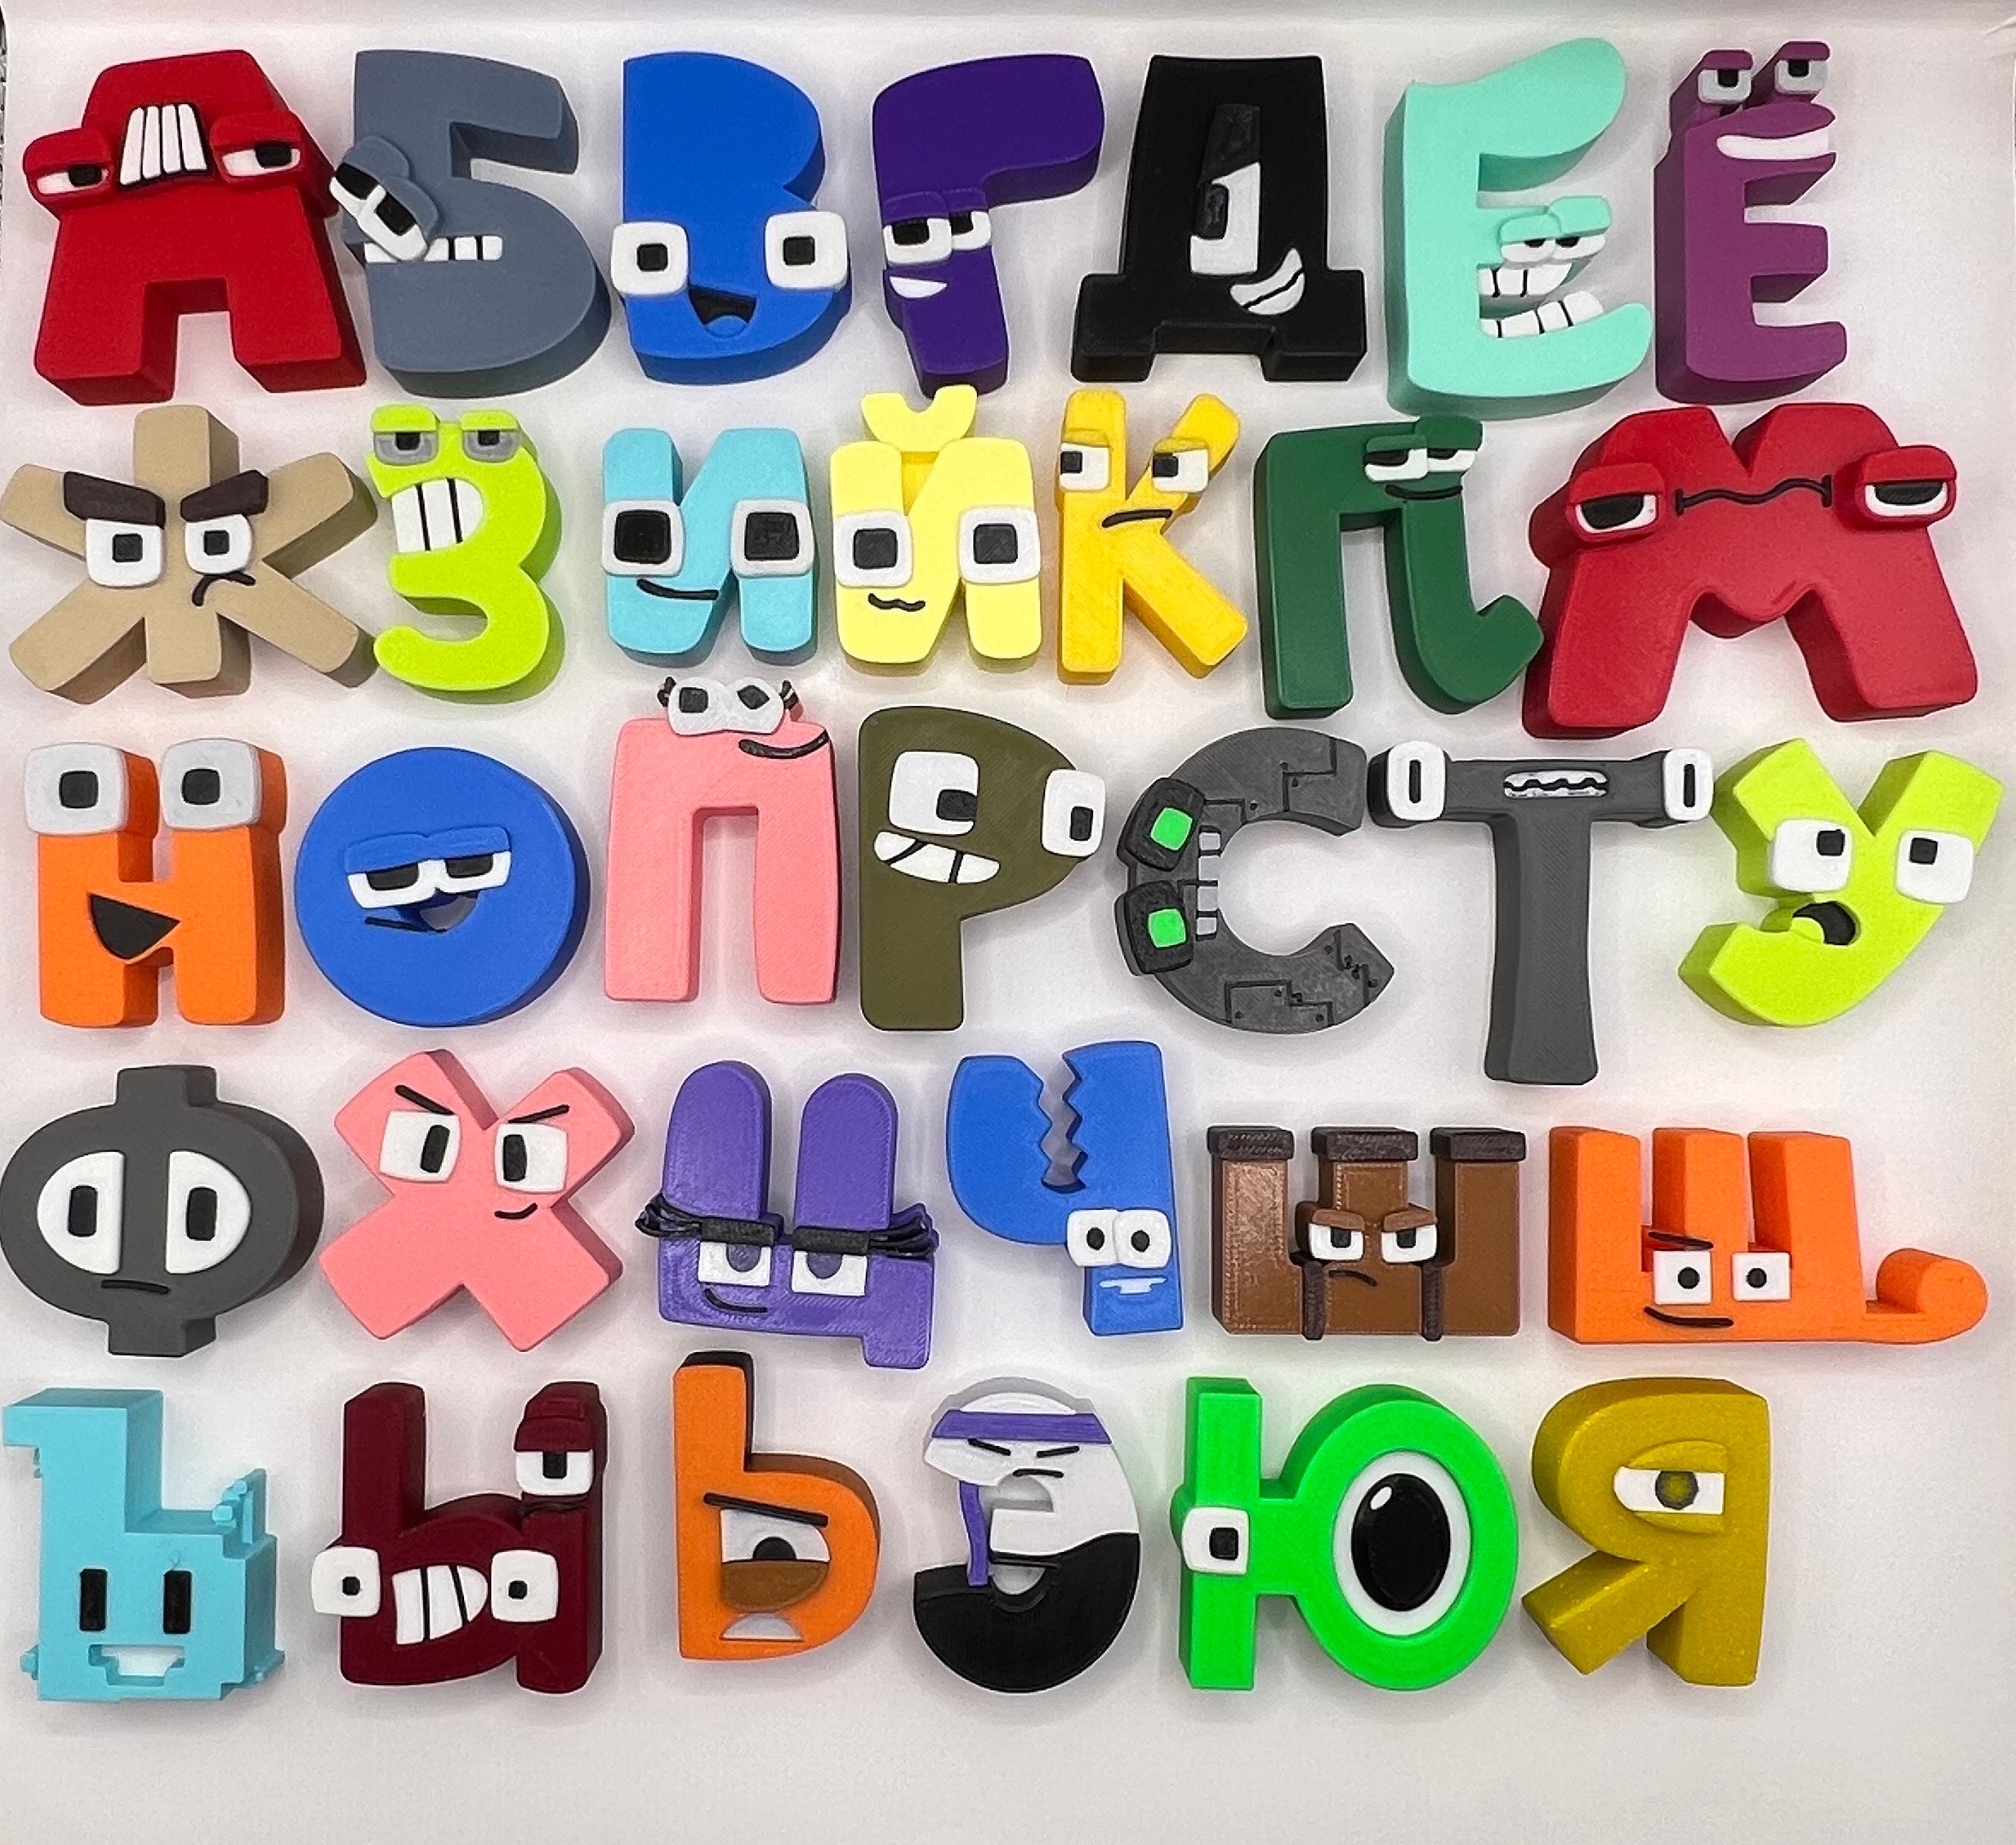 Toys - Russian Alphabet Figures - Full Set 33 Letters!